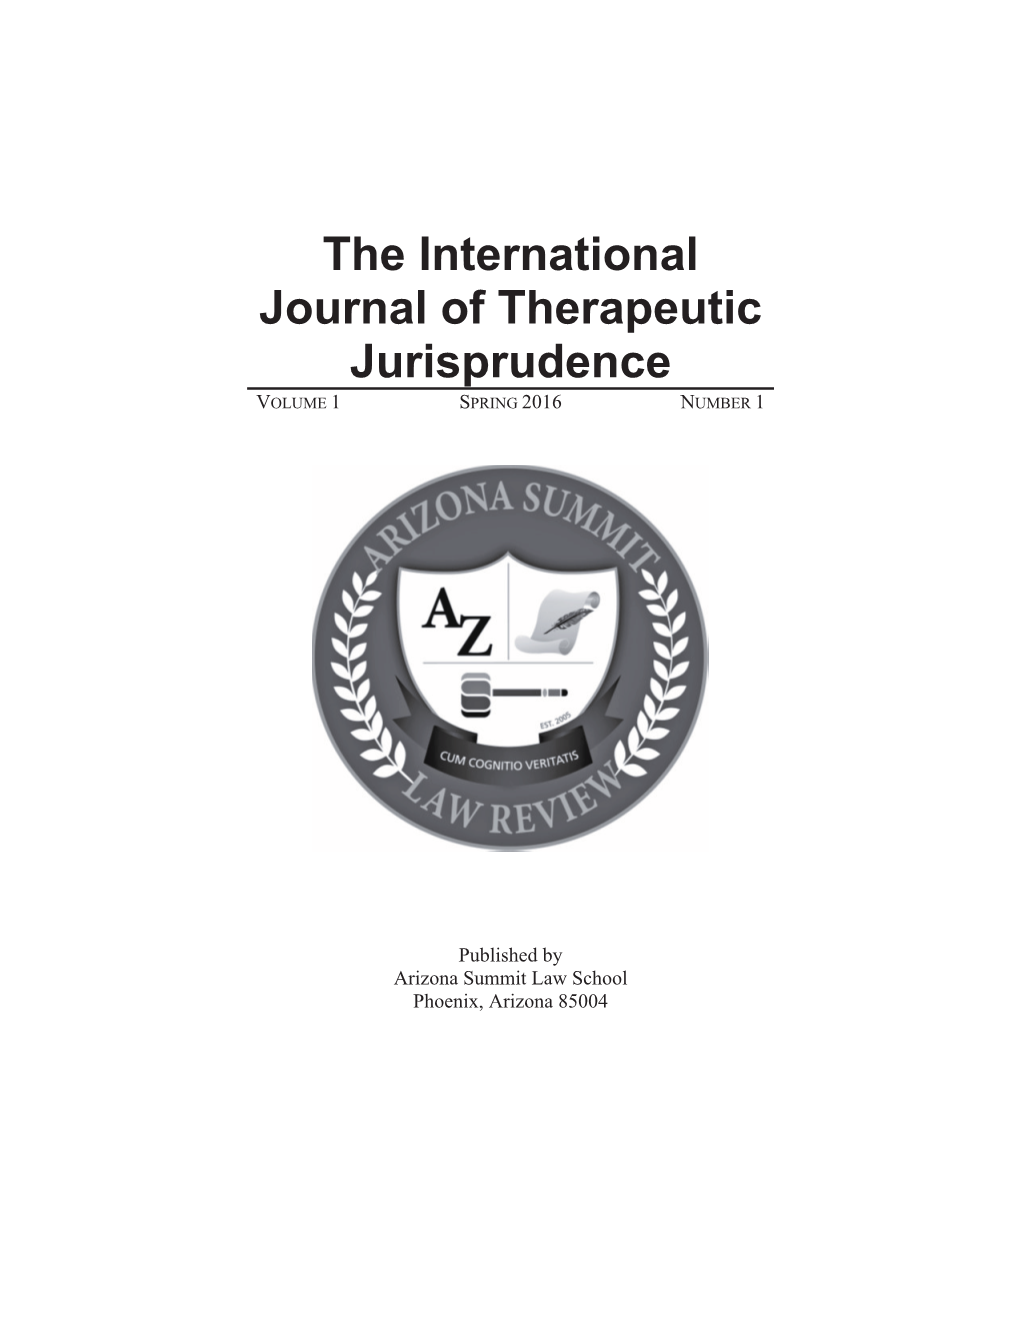 The International Journal of Therapeutic Jurisprudence